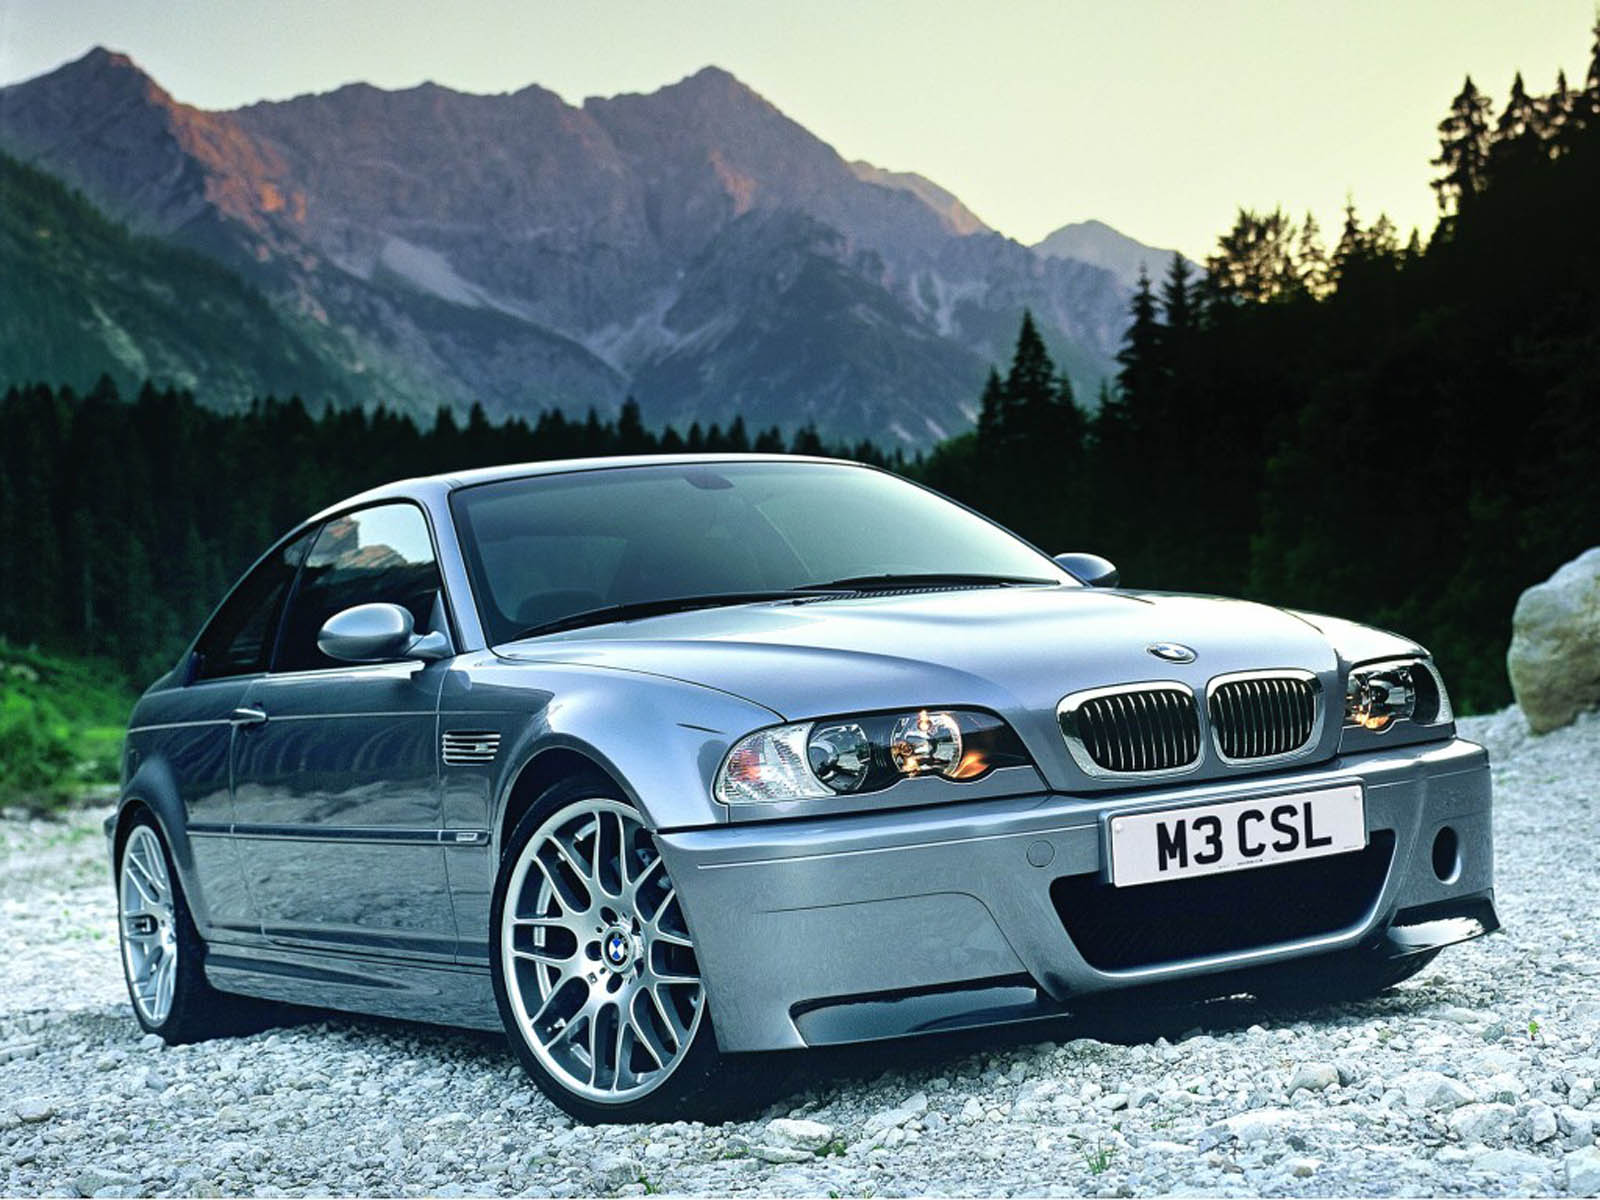 BMW+M3+E46+CSL+Car+Wallpapers+8.jpg